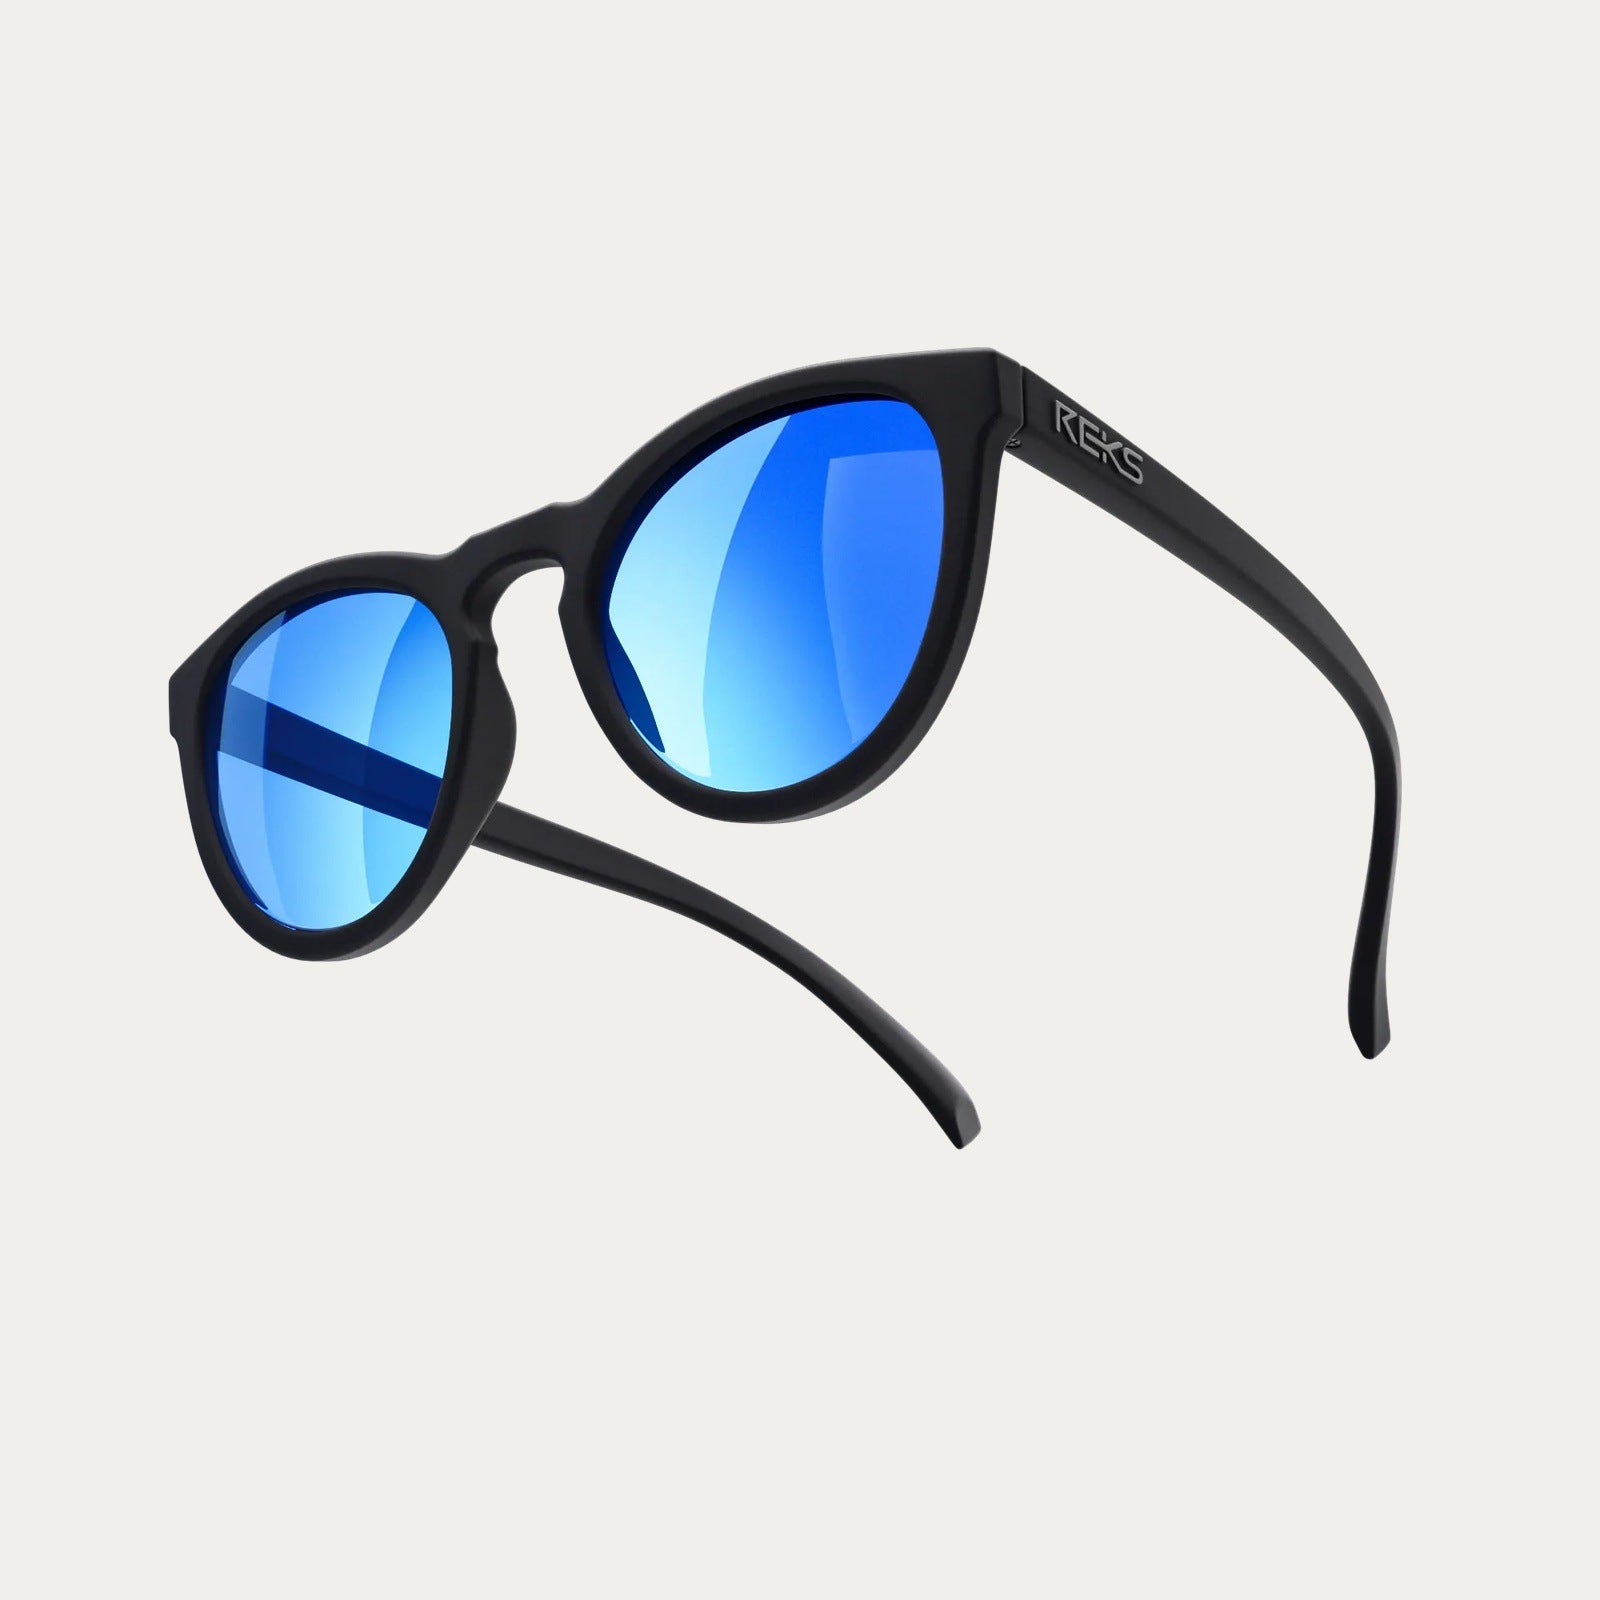 Reks | Round Polarized Polycarbonate Sunglasses Blue Mirror